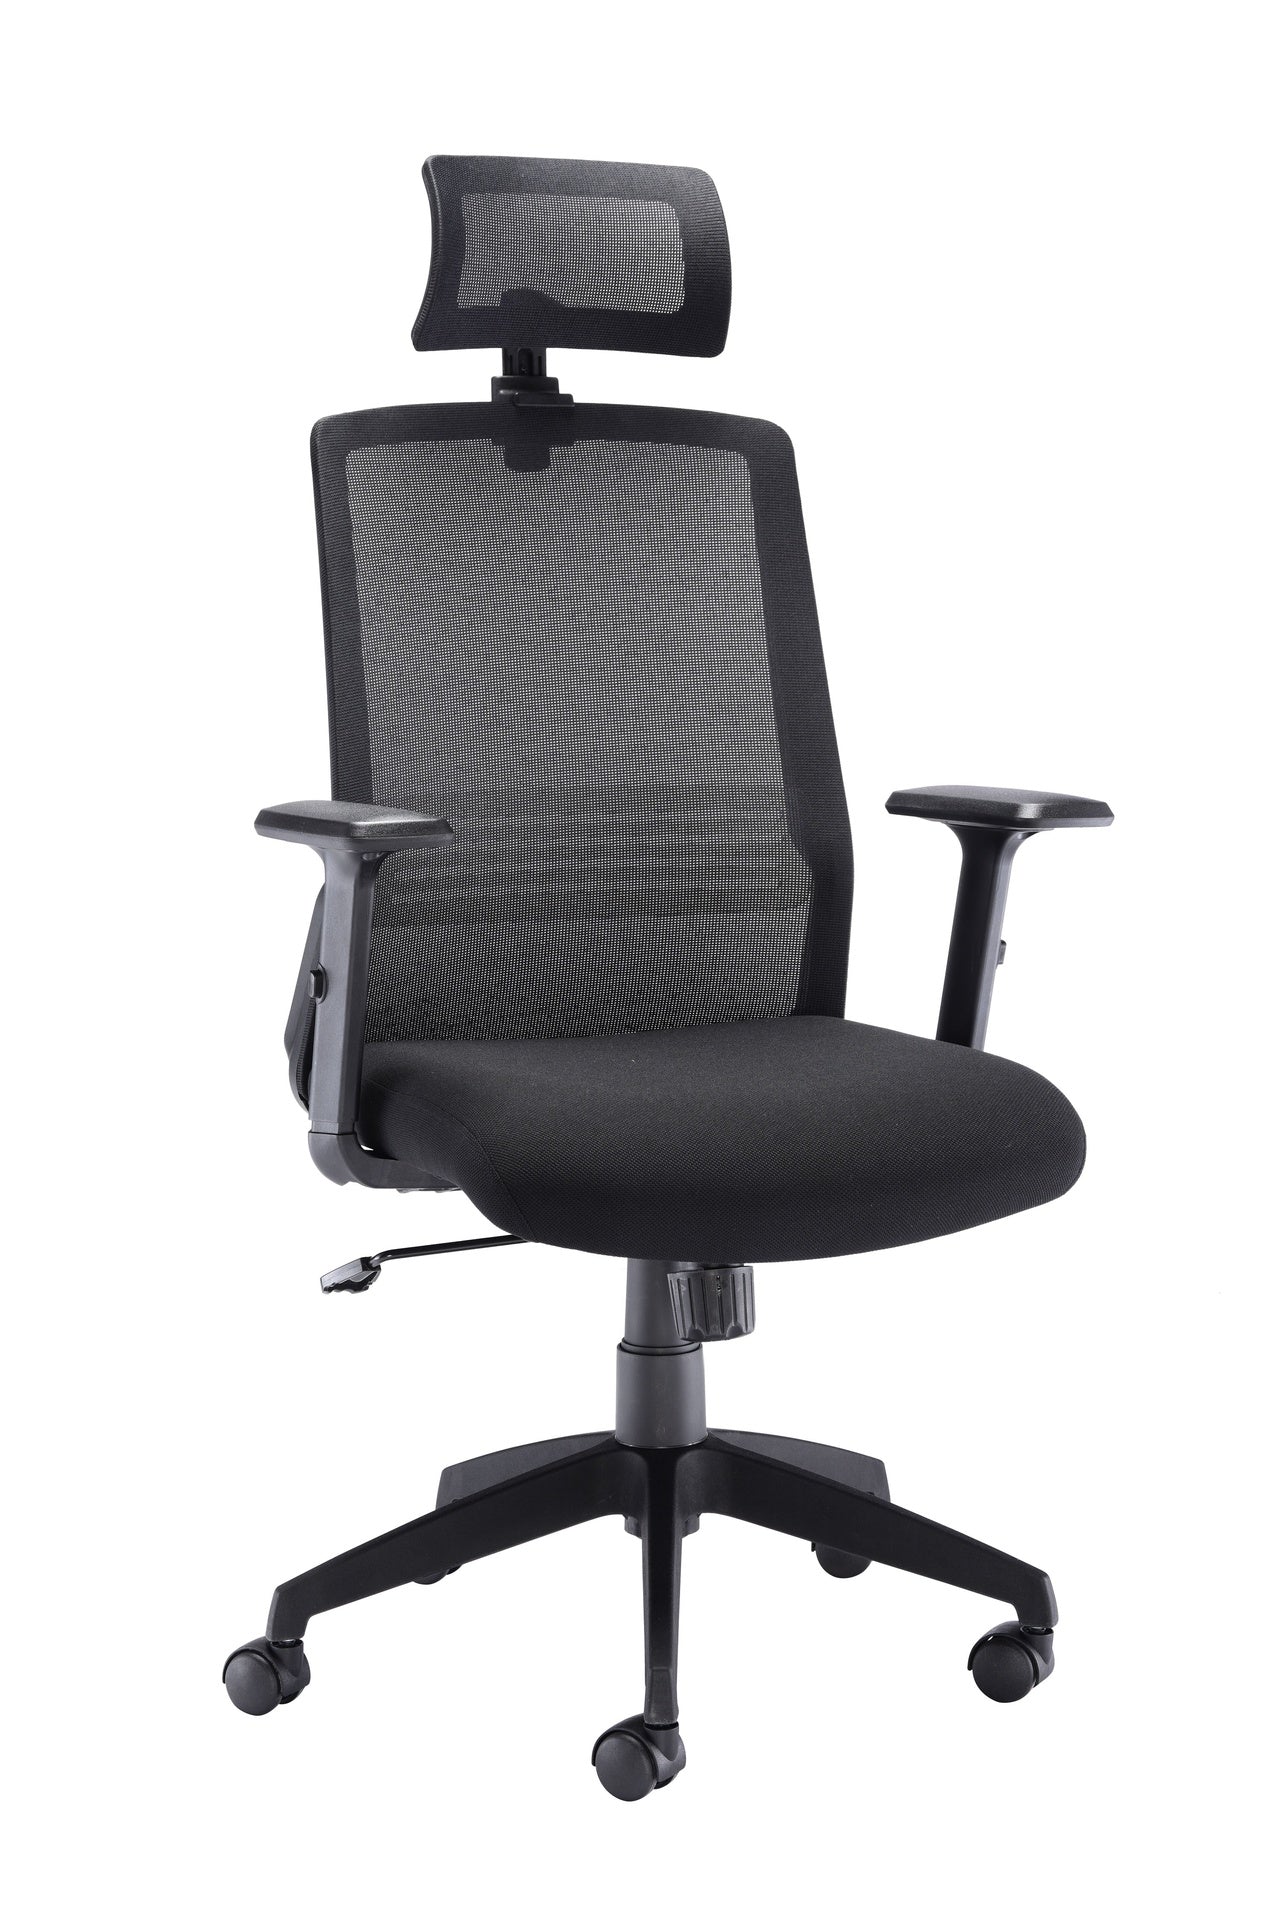 Cranbrook Ergonomic Chair - Black